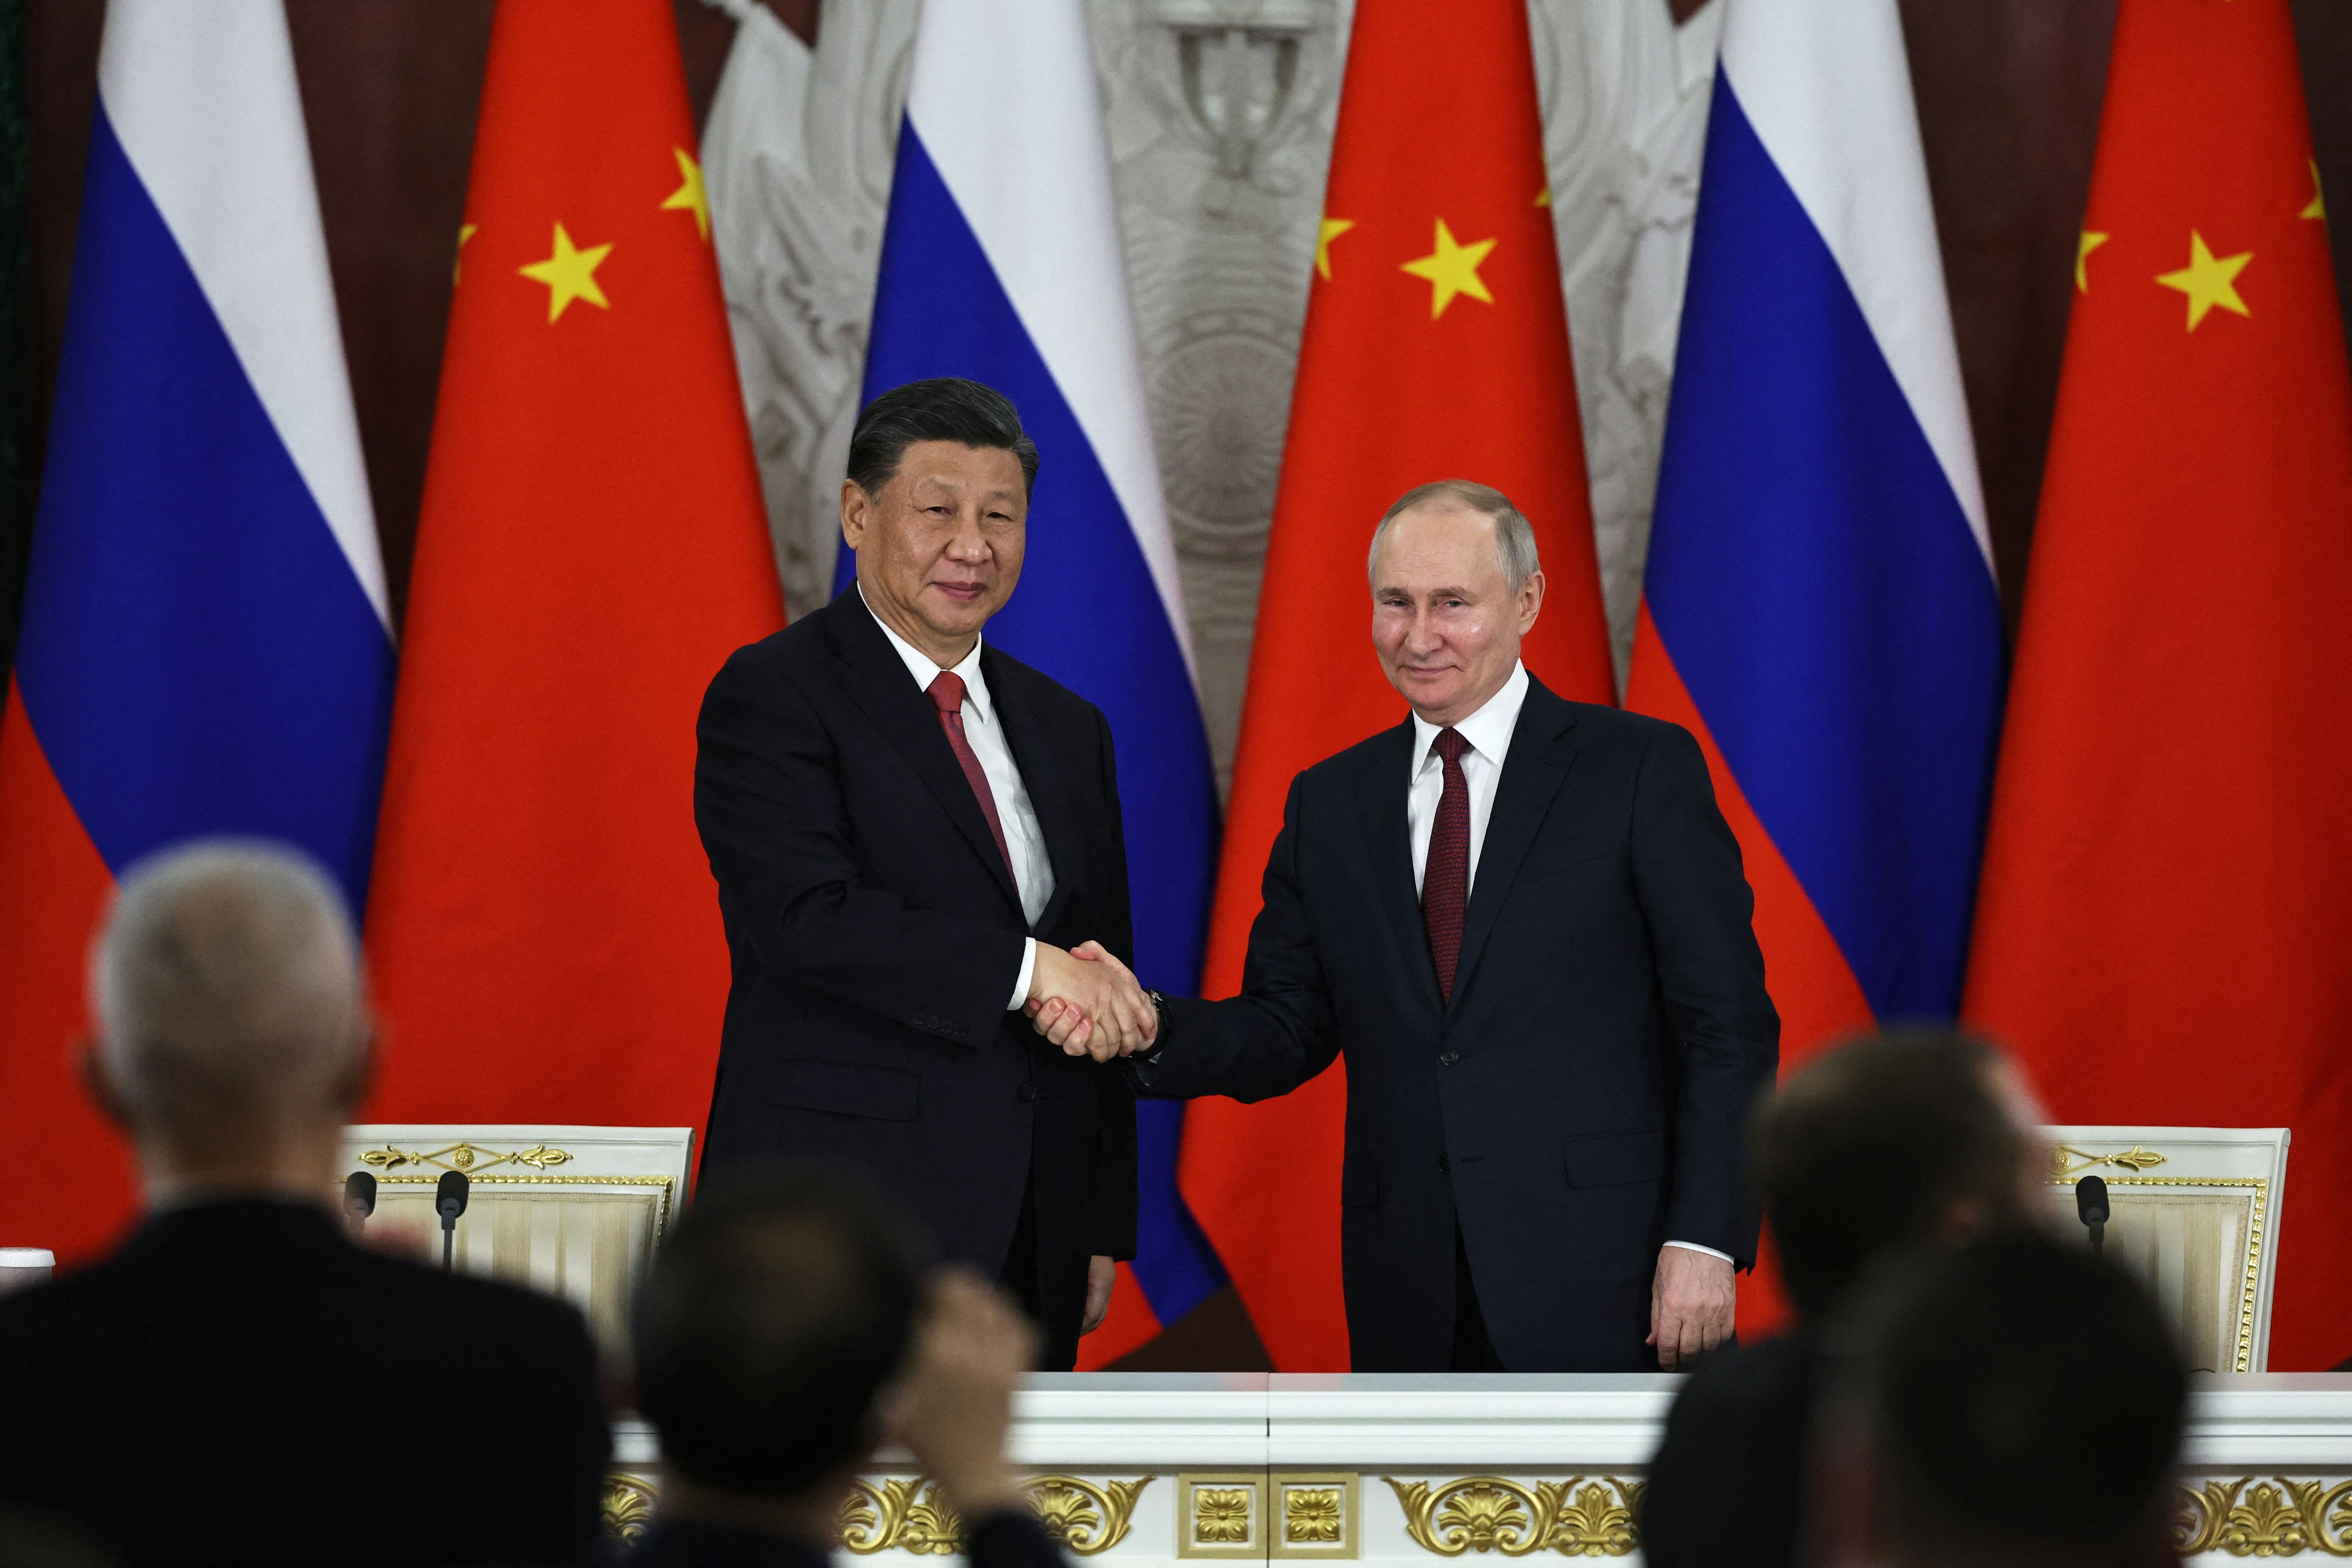 Xi Jinping and President Putin shake hands